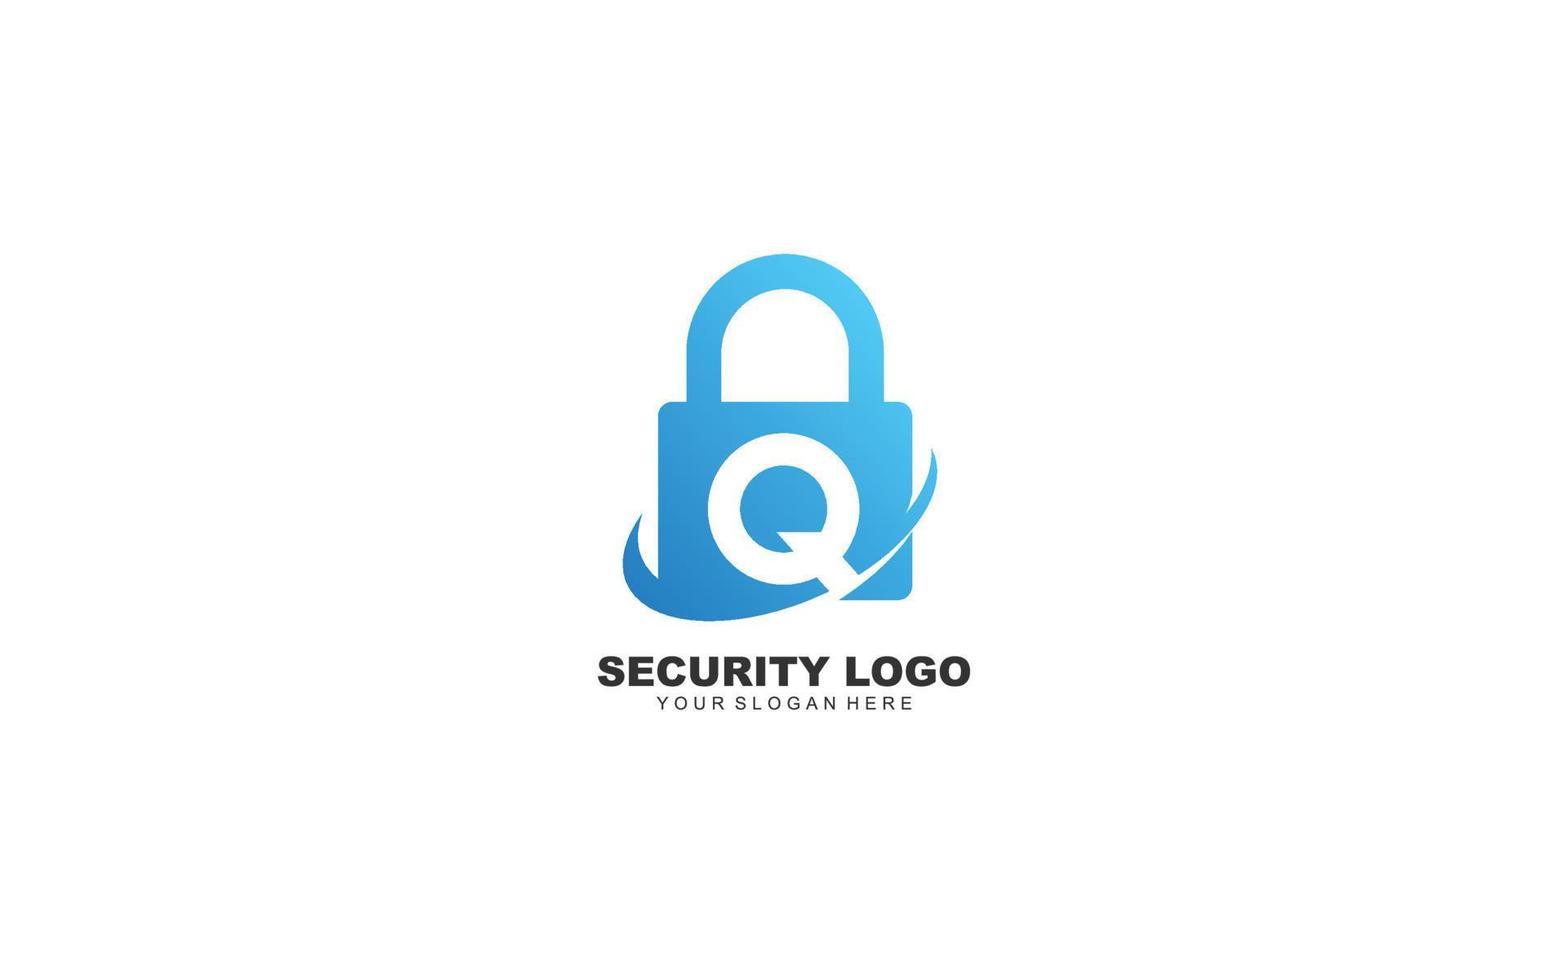 Q Security logo design inspiration. Vector letter template design for brand.